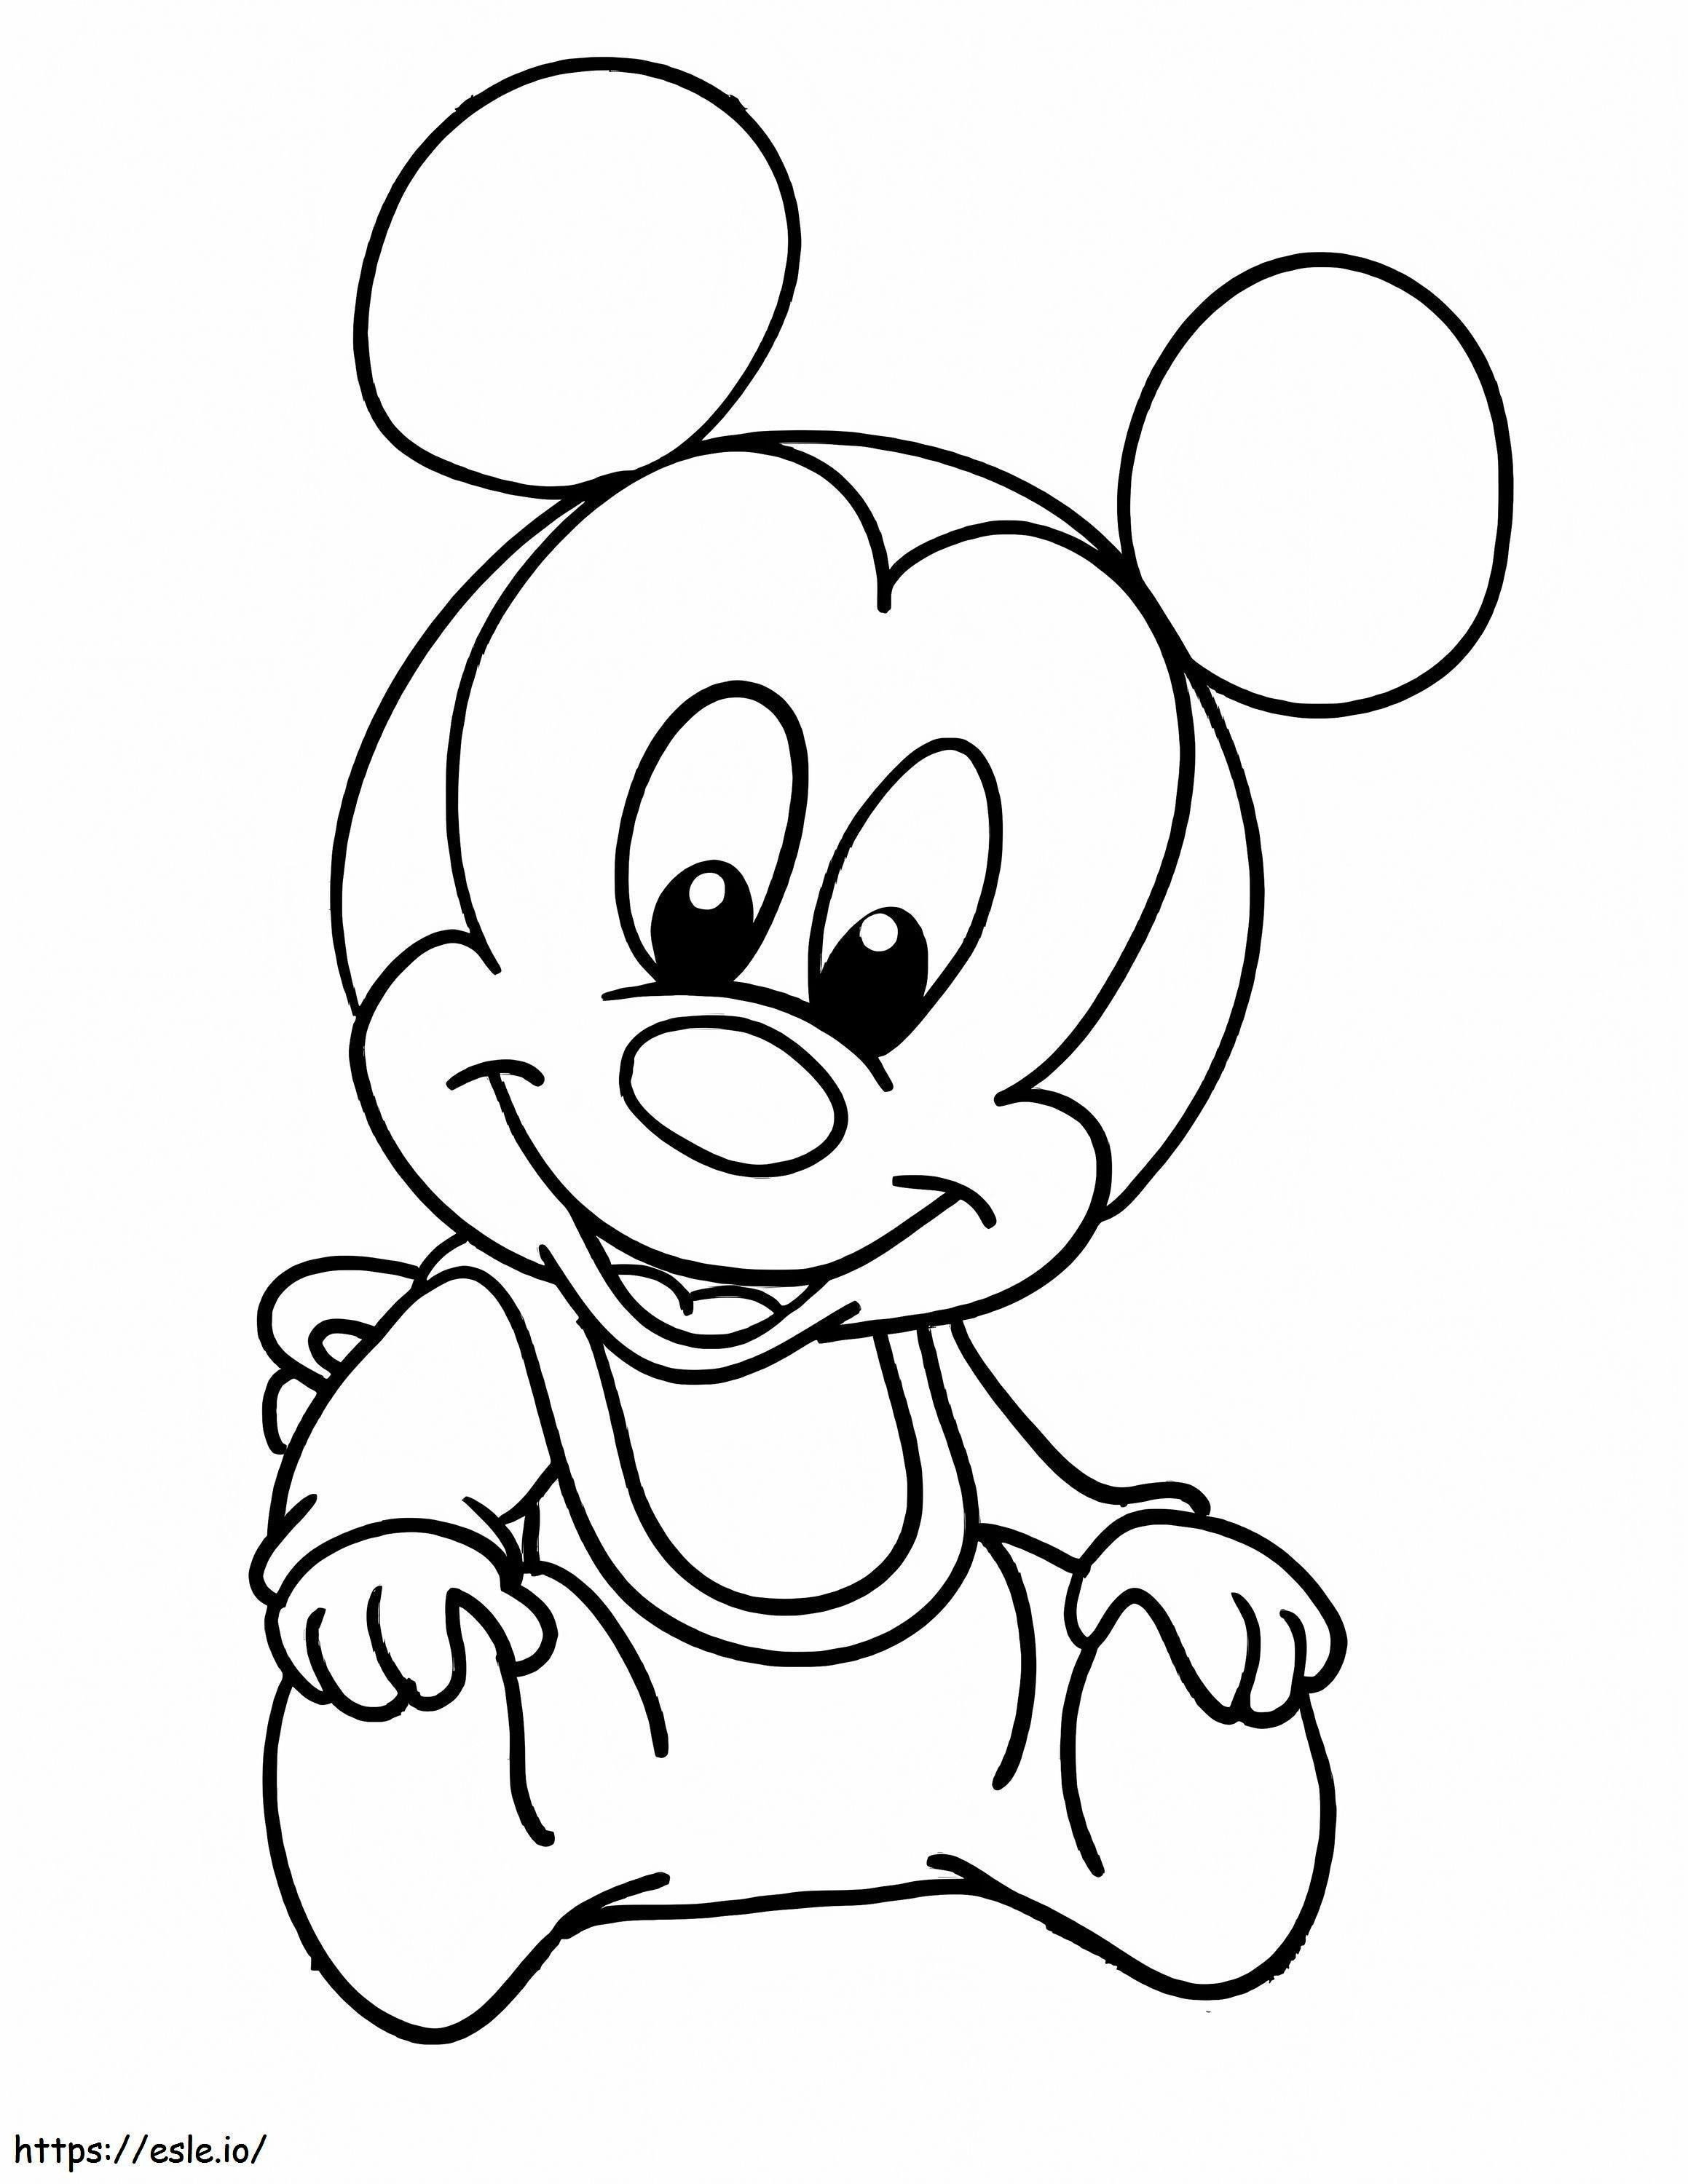 Leuke baby Mickey Mouse-zitting kleurplaat kleurplaat